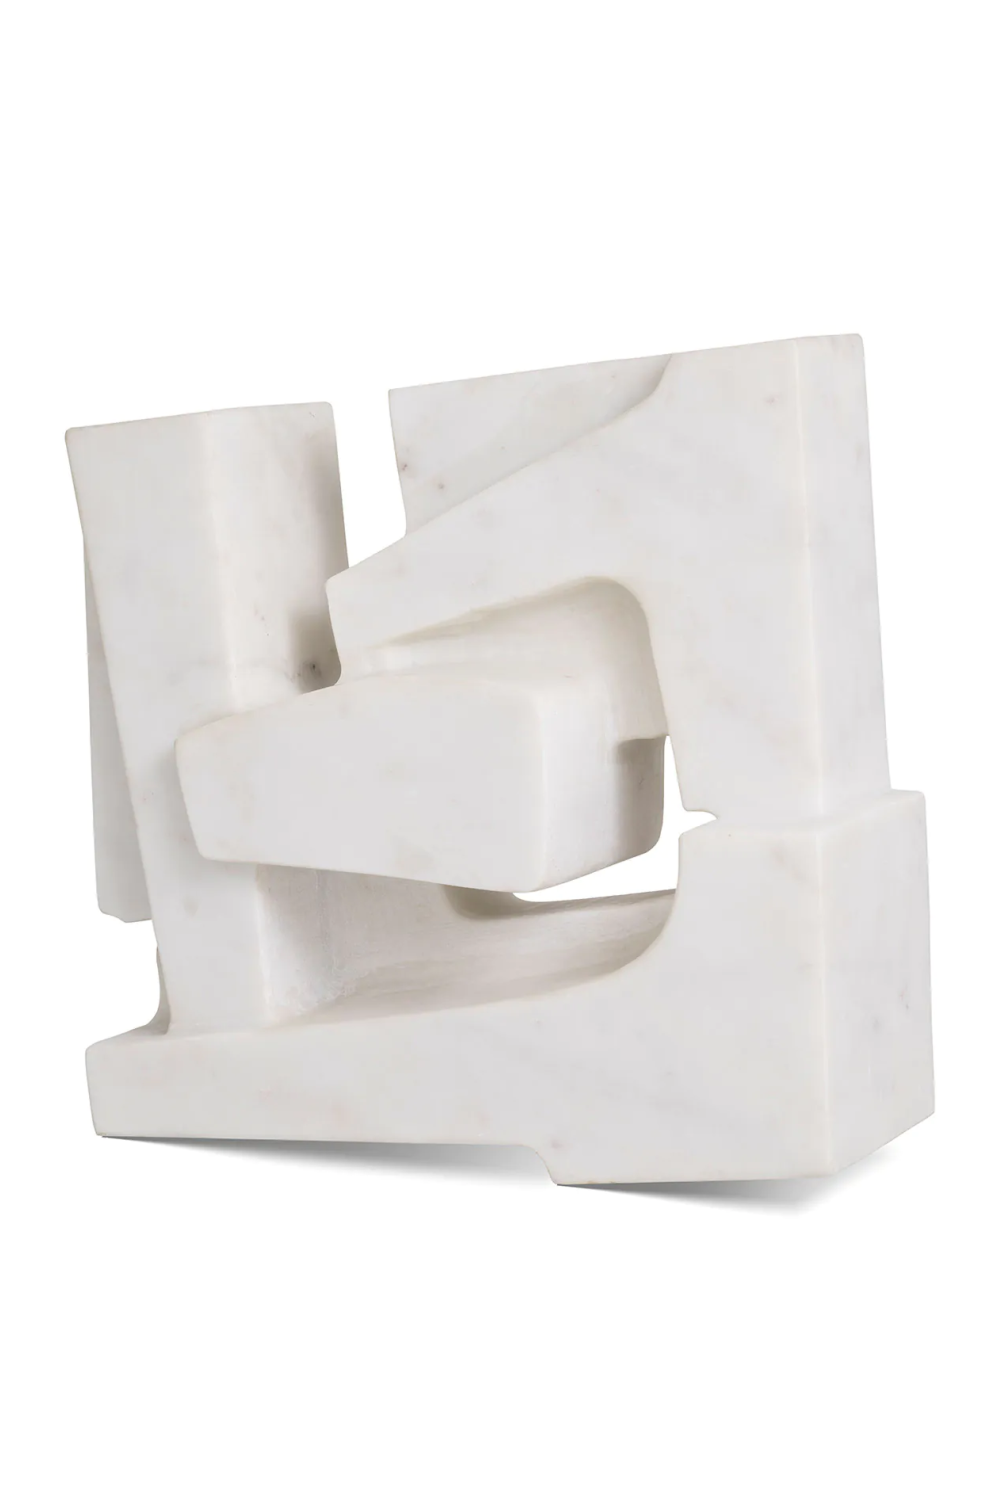 White Marble Abstract Deco Object | Eichholtz Talmont | Oroa.com